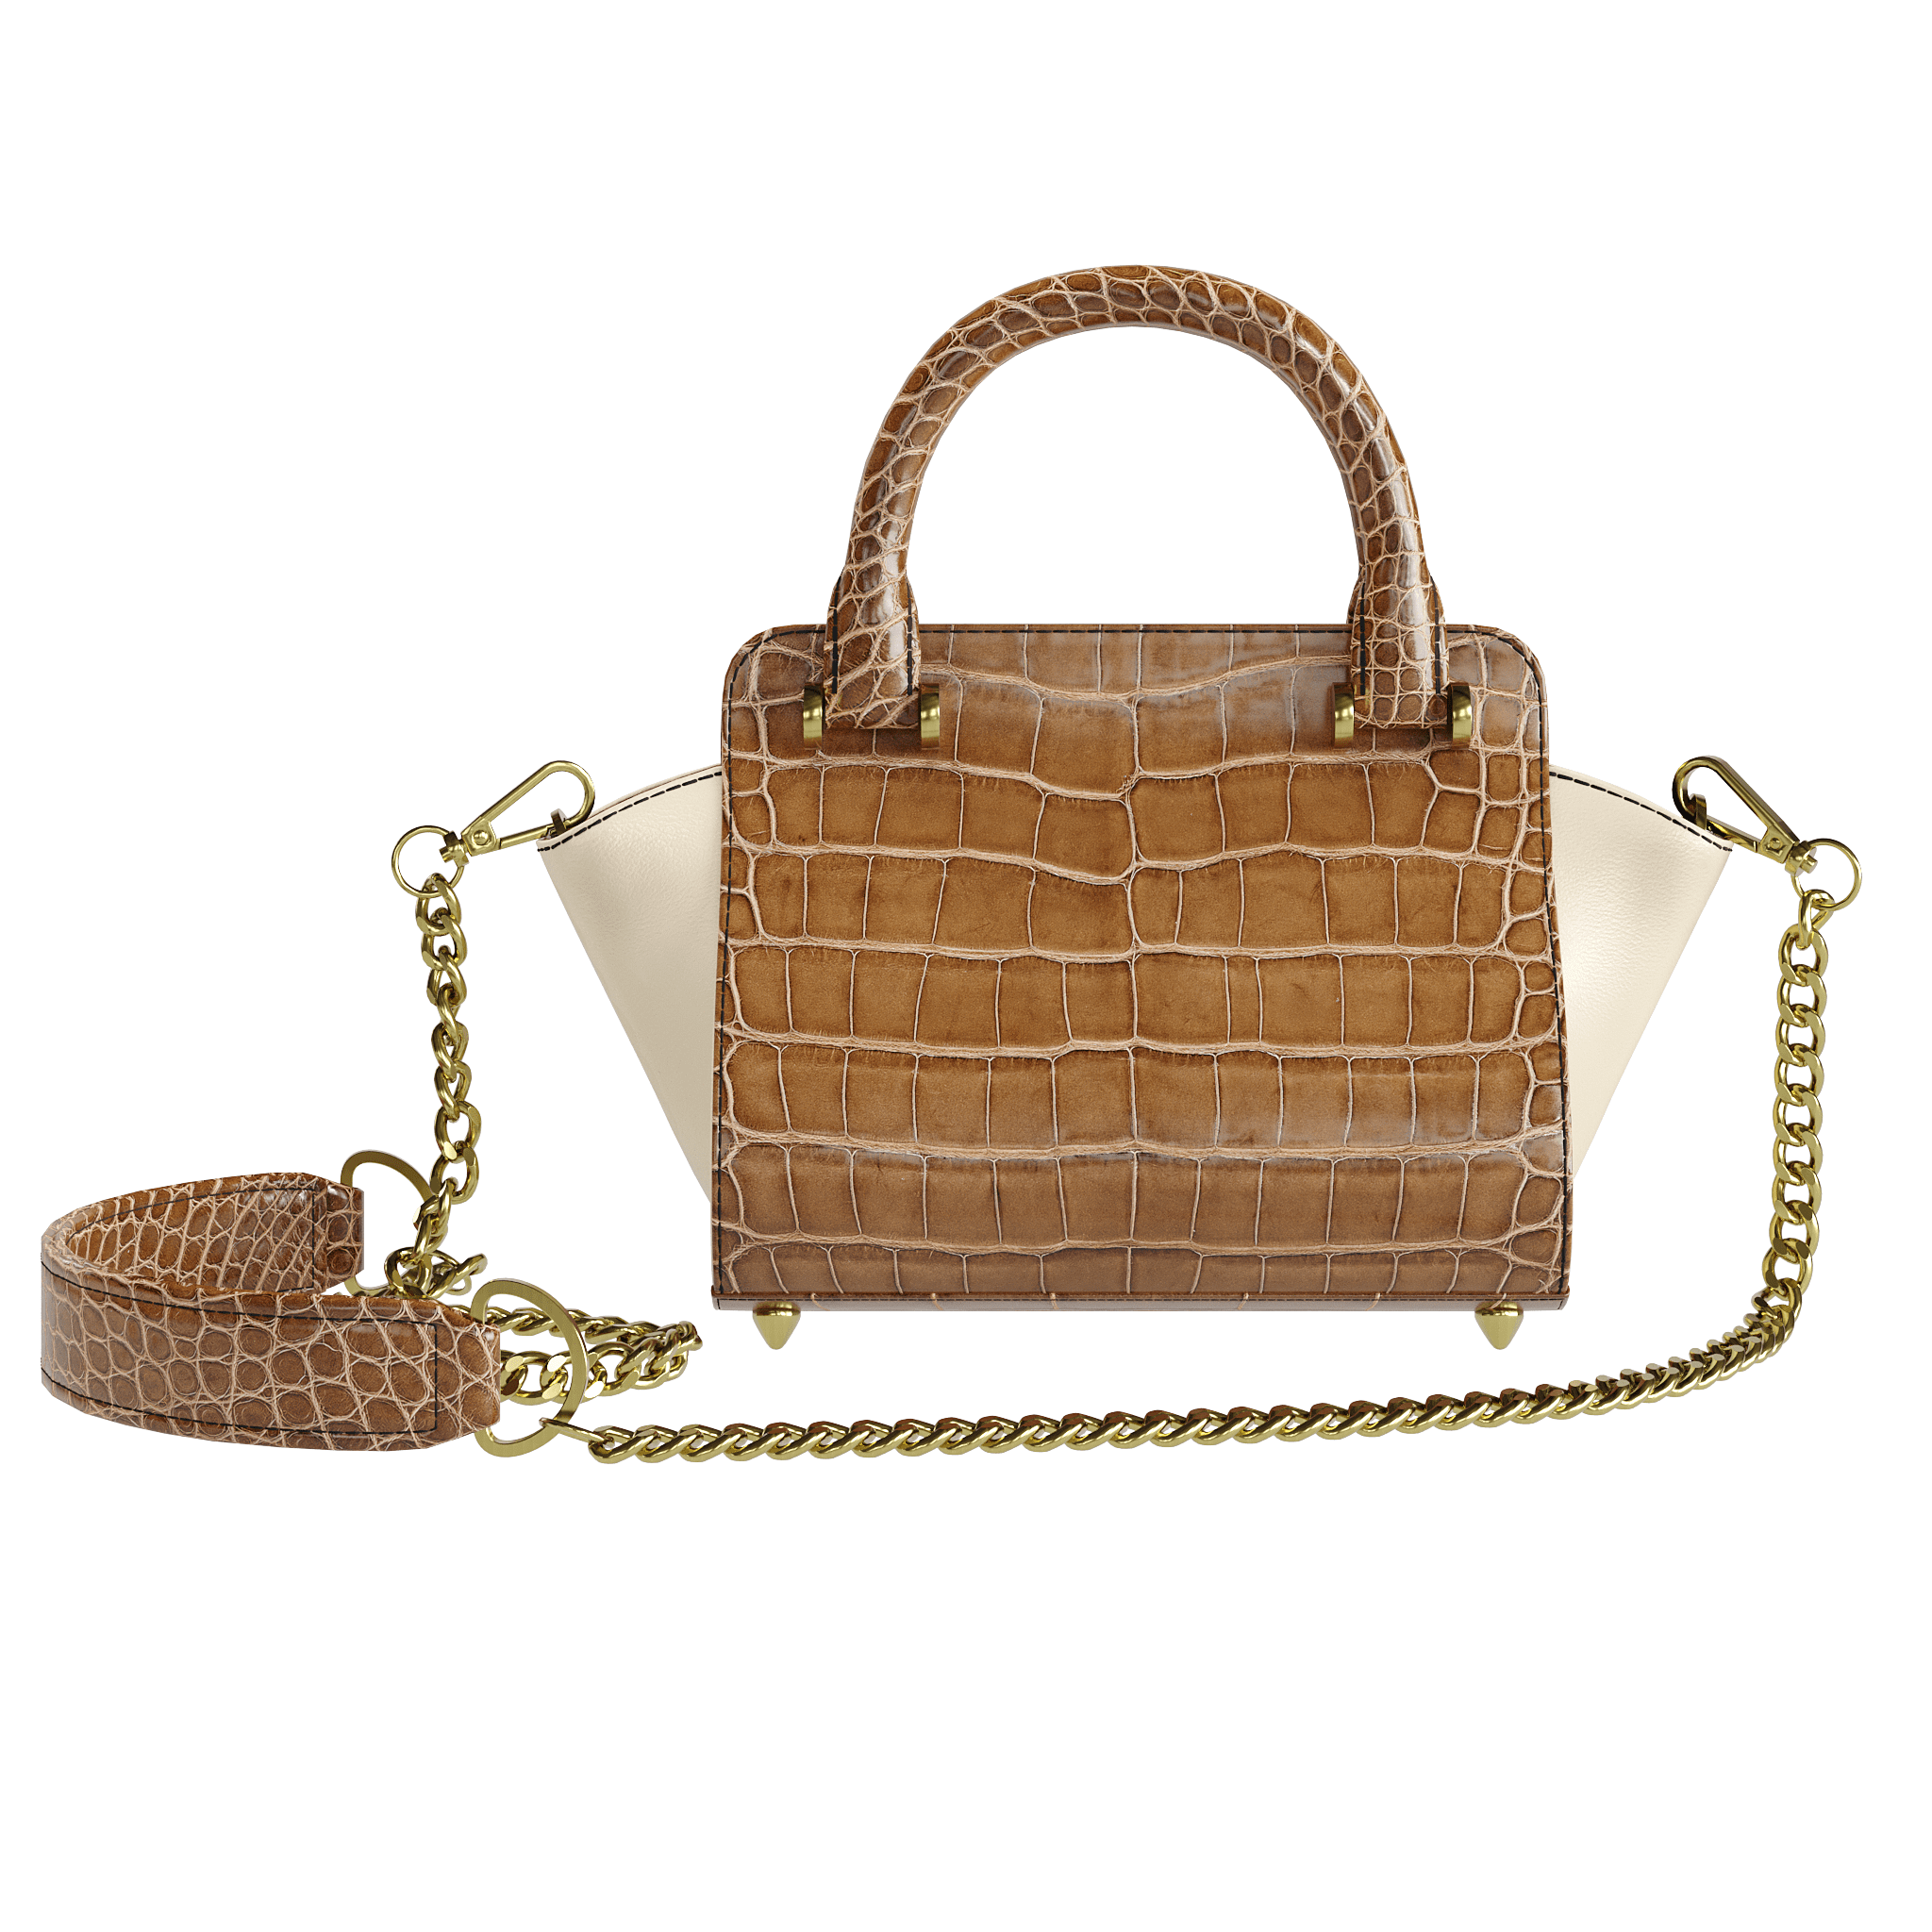 Authentic Brown Alligator Handbag With Cream Accents